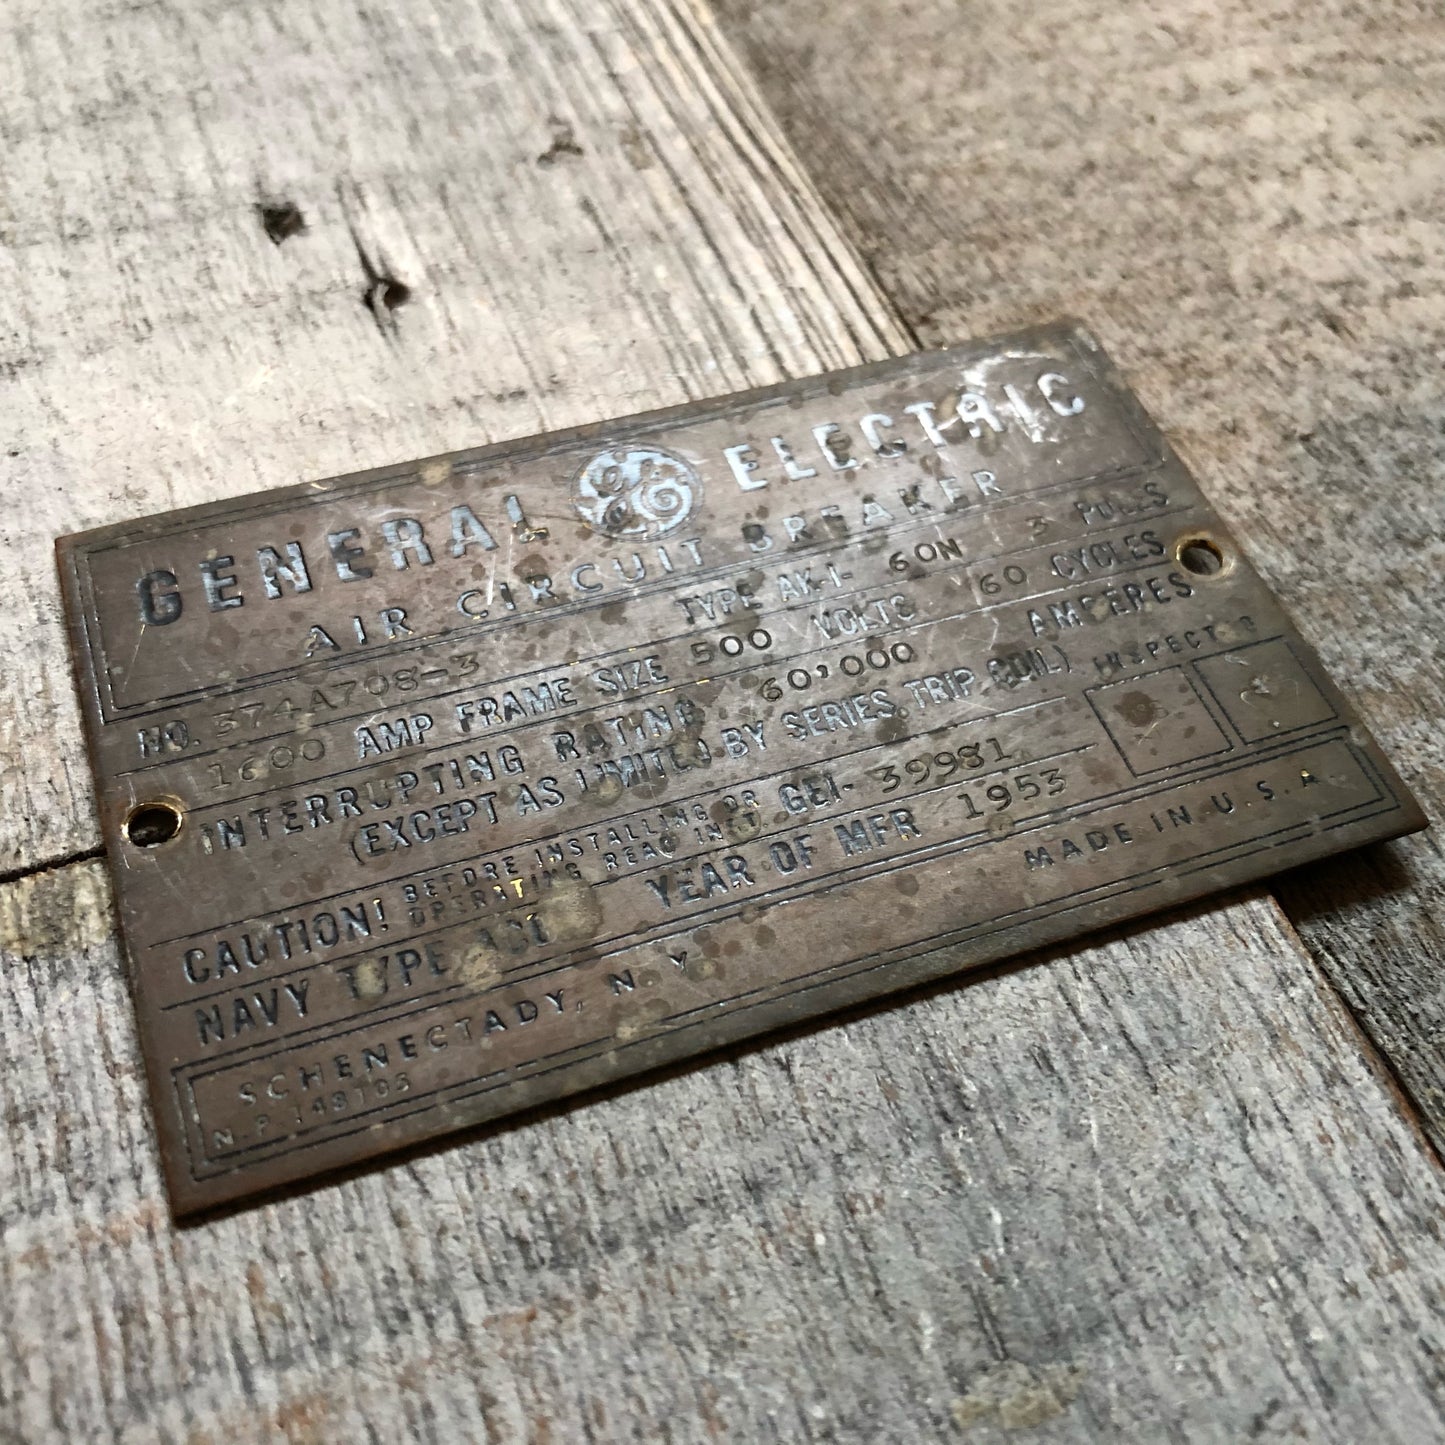 General Electric Air Circuit Breaker Plate - Annapolis Maritime Antiques